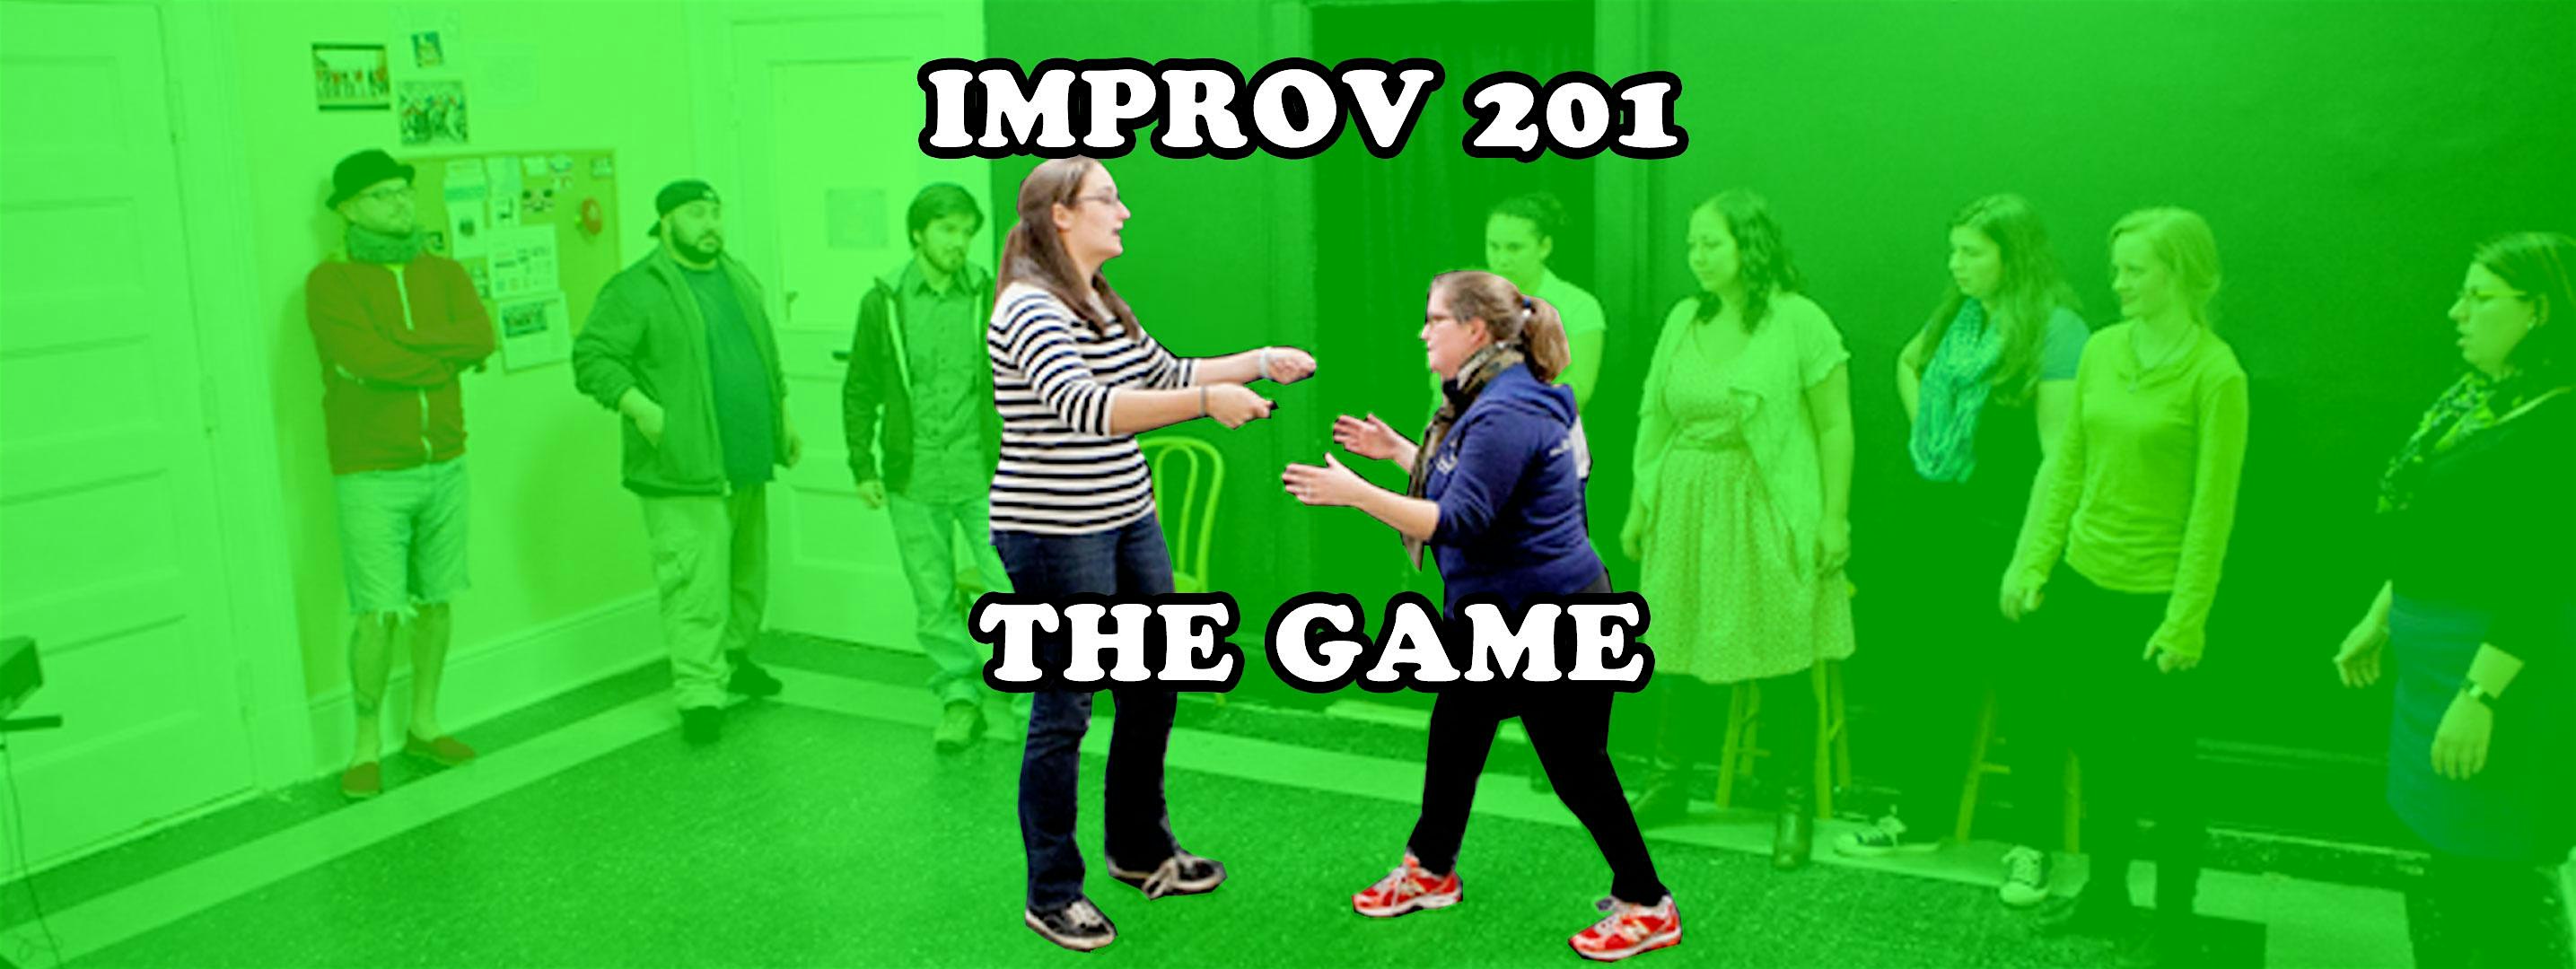 Improv 201 - The Game